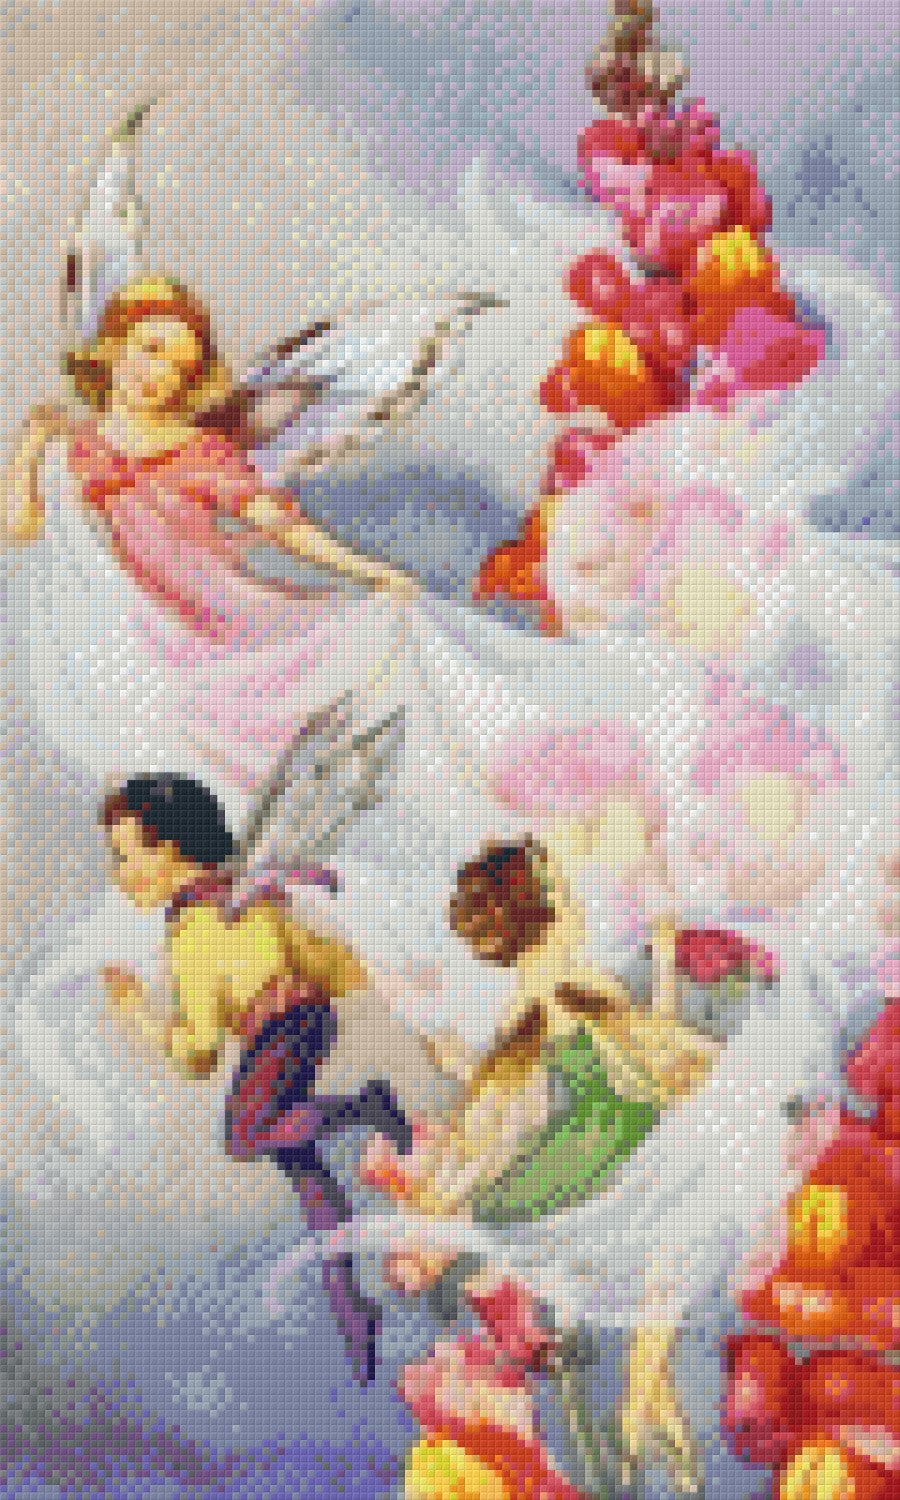 Pixel hobby classic set - flower fairies